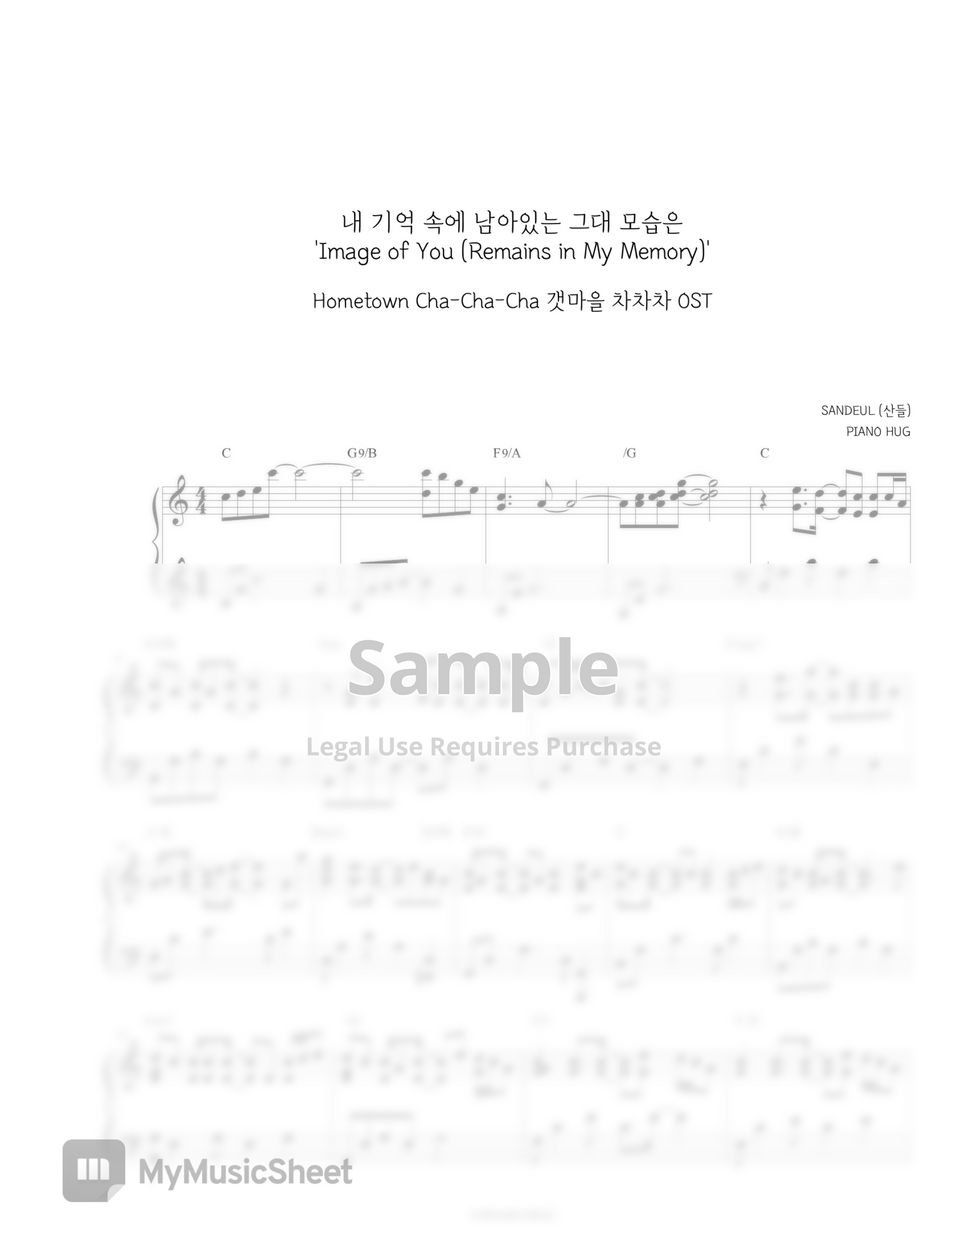 Hometown Cha Cha Cha OST - Compilation by Piano Hug